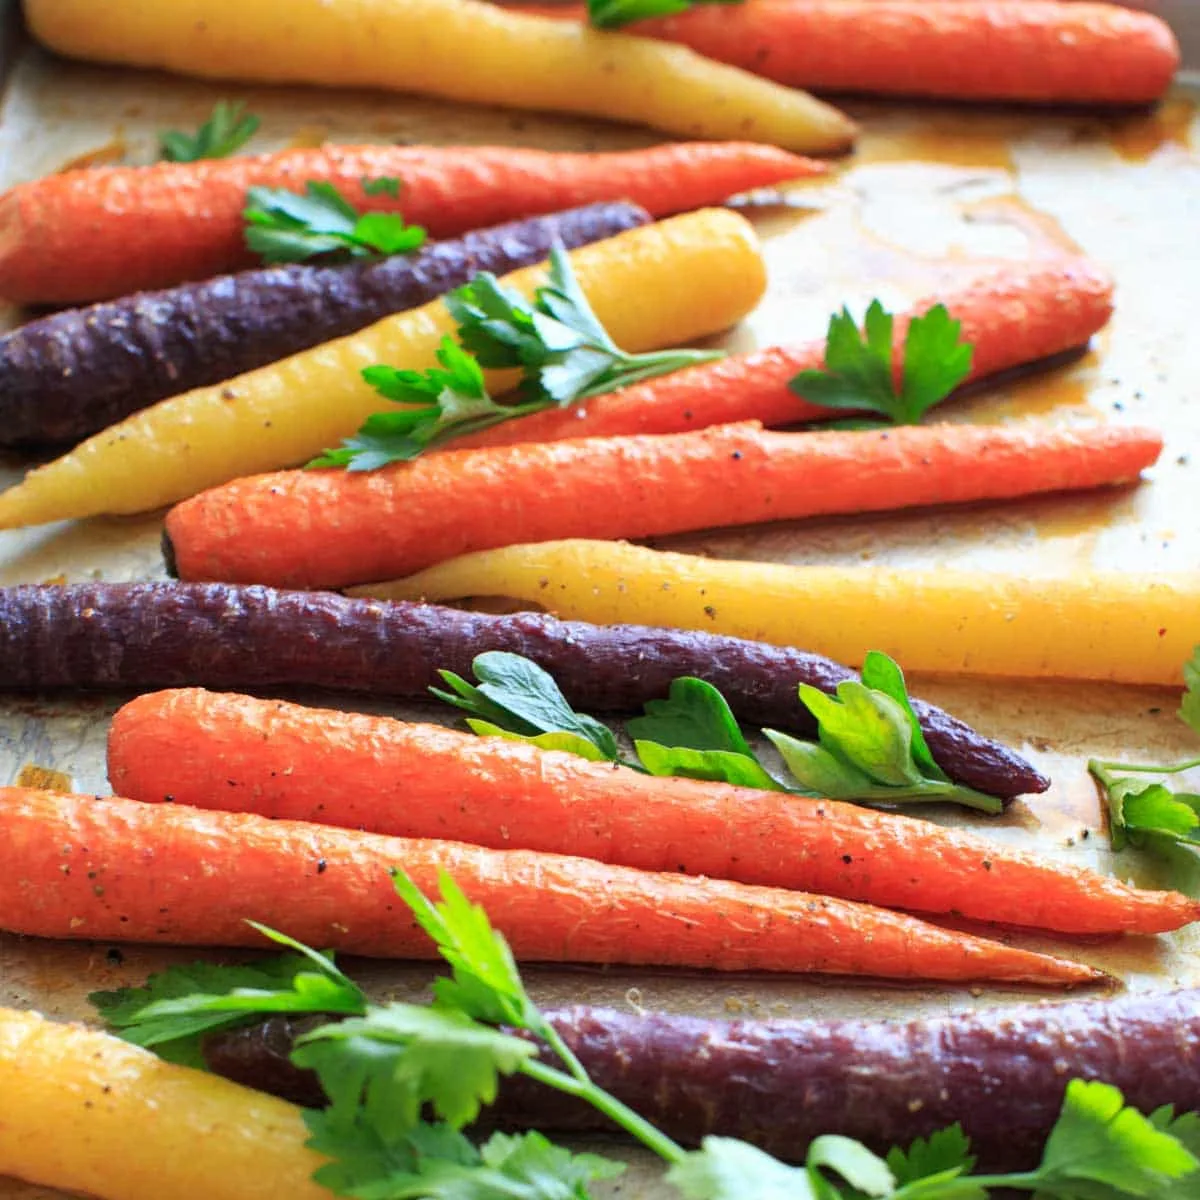 Maple roasted carrots on baking sheet